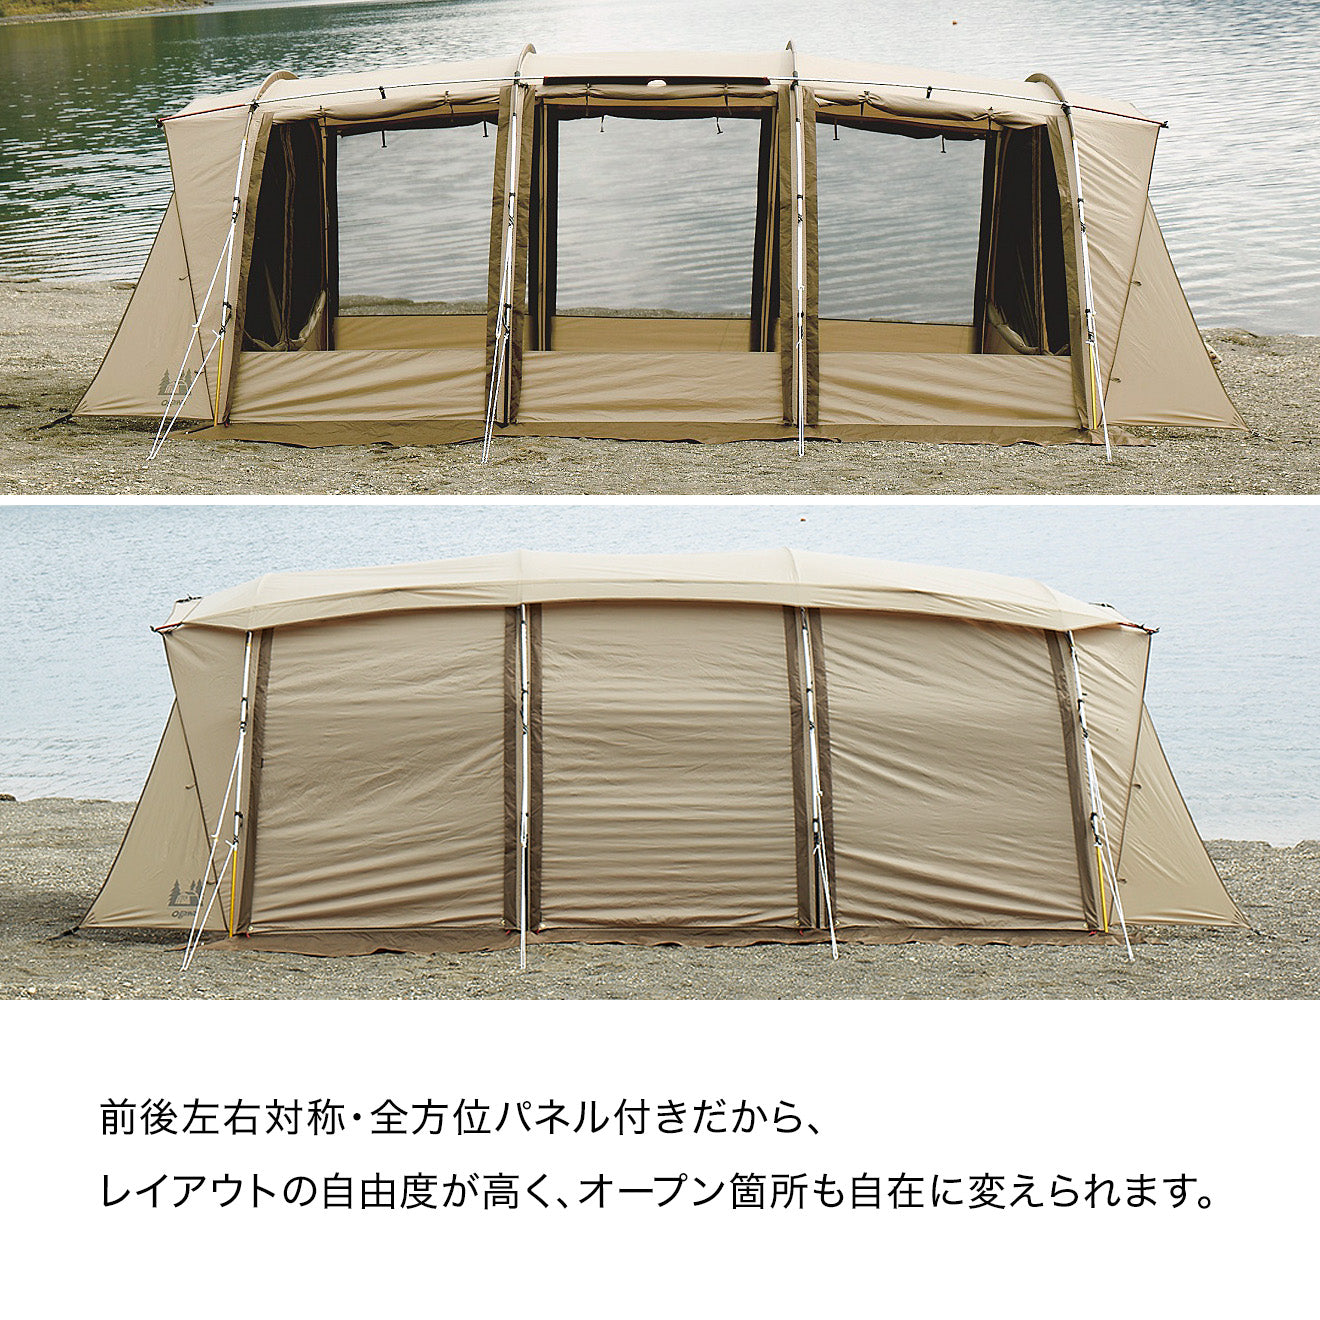 ogawa(オガワ) アポロン 5人用 - テント・タープ